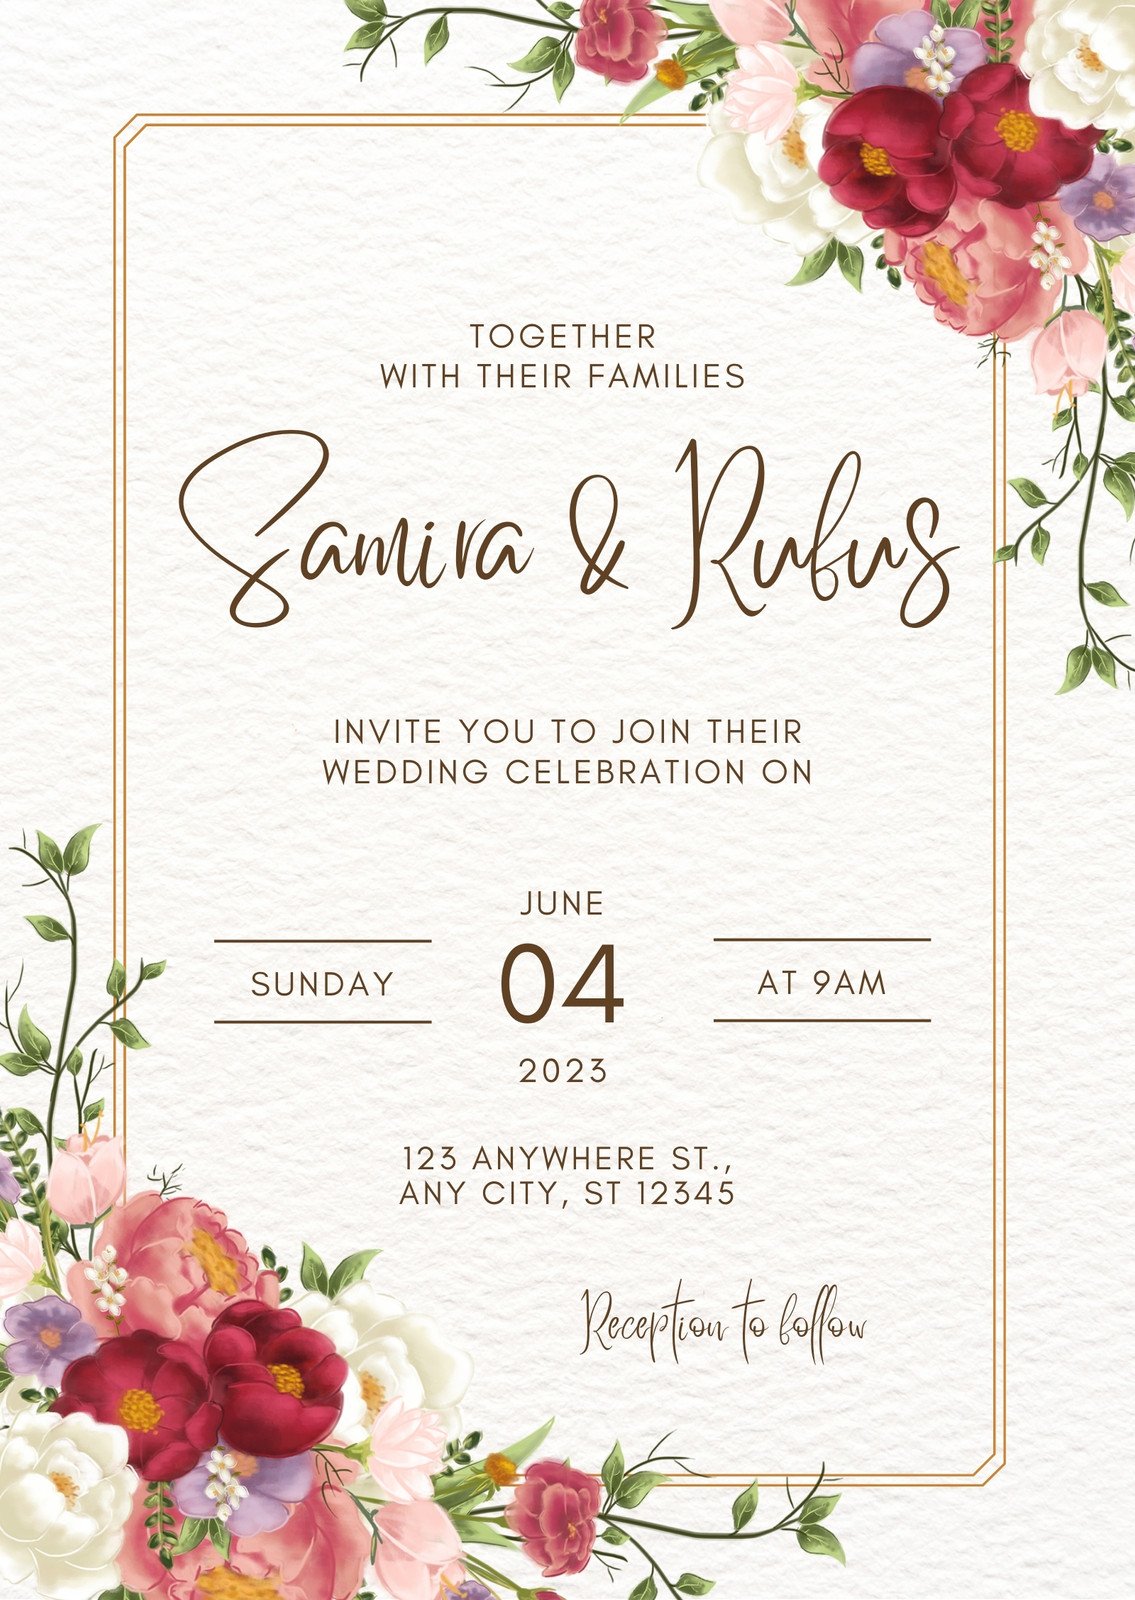 Wedding invitations samples